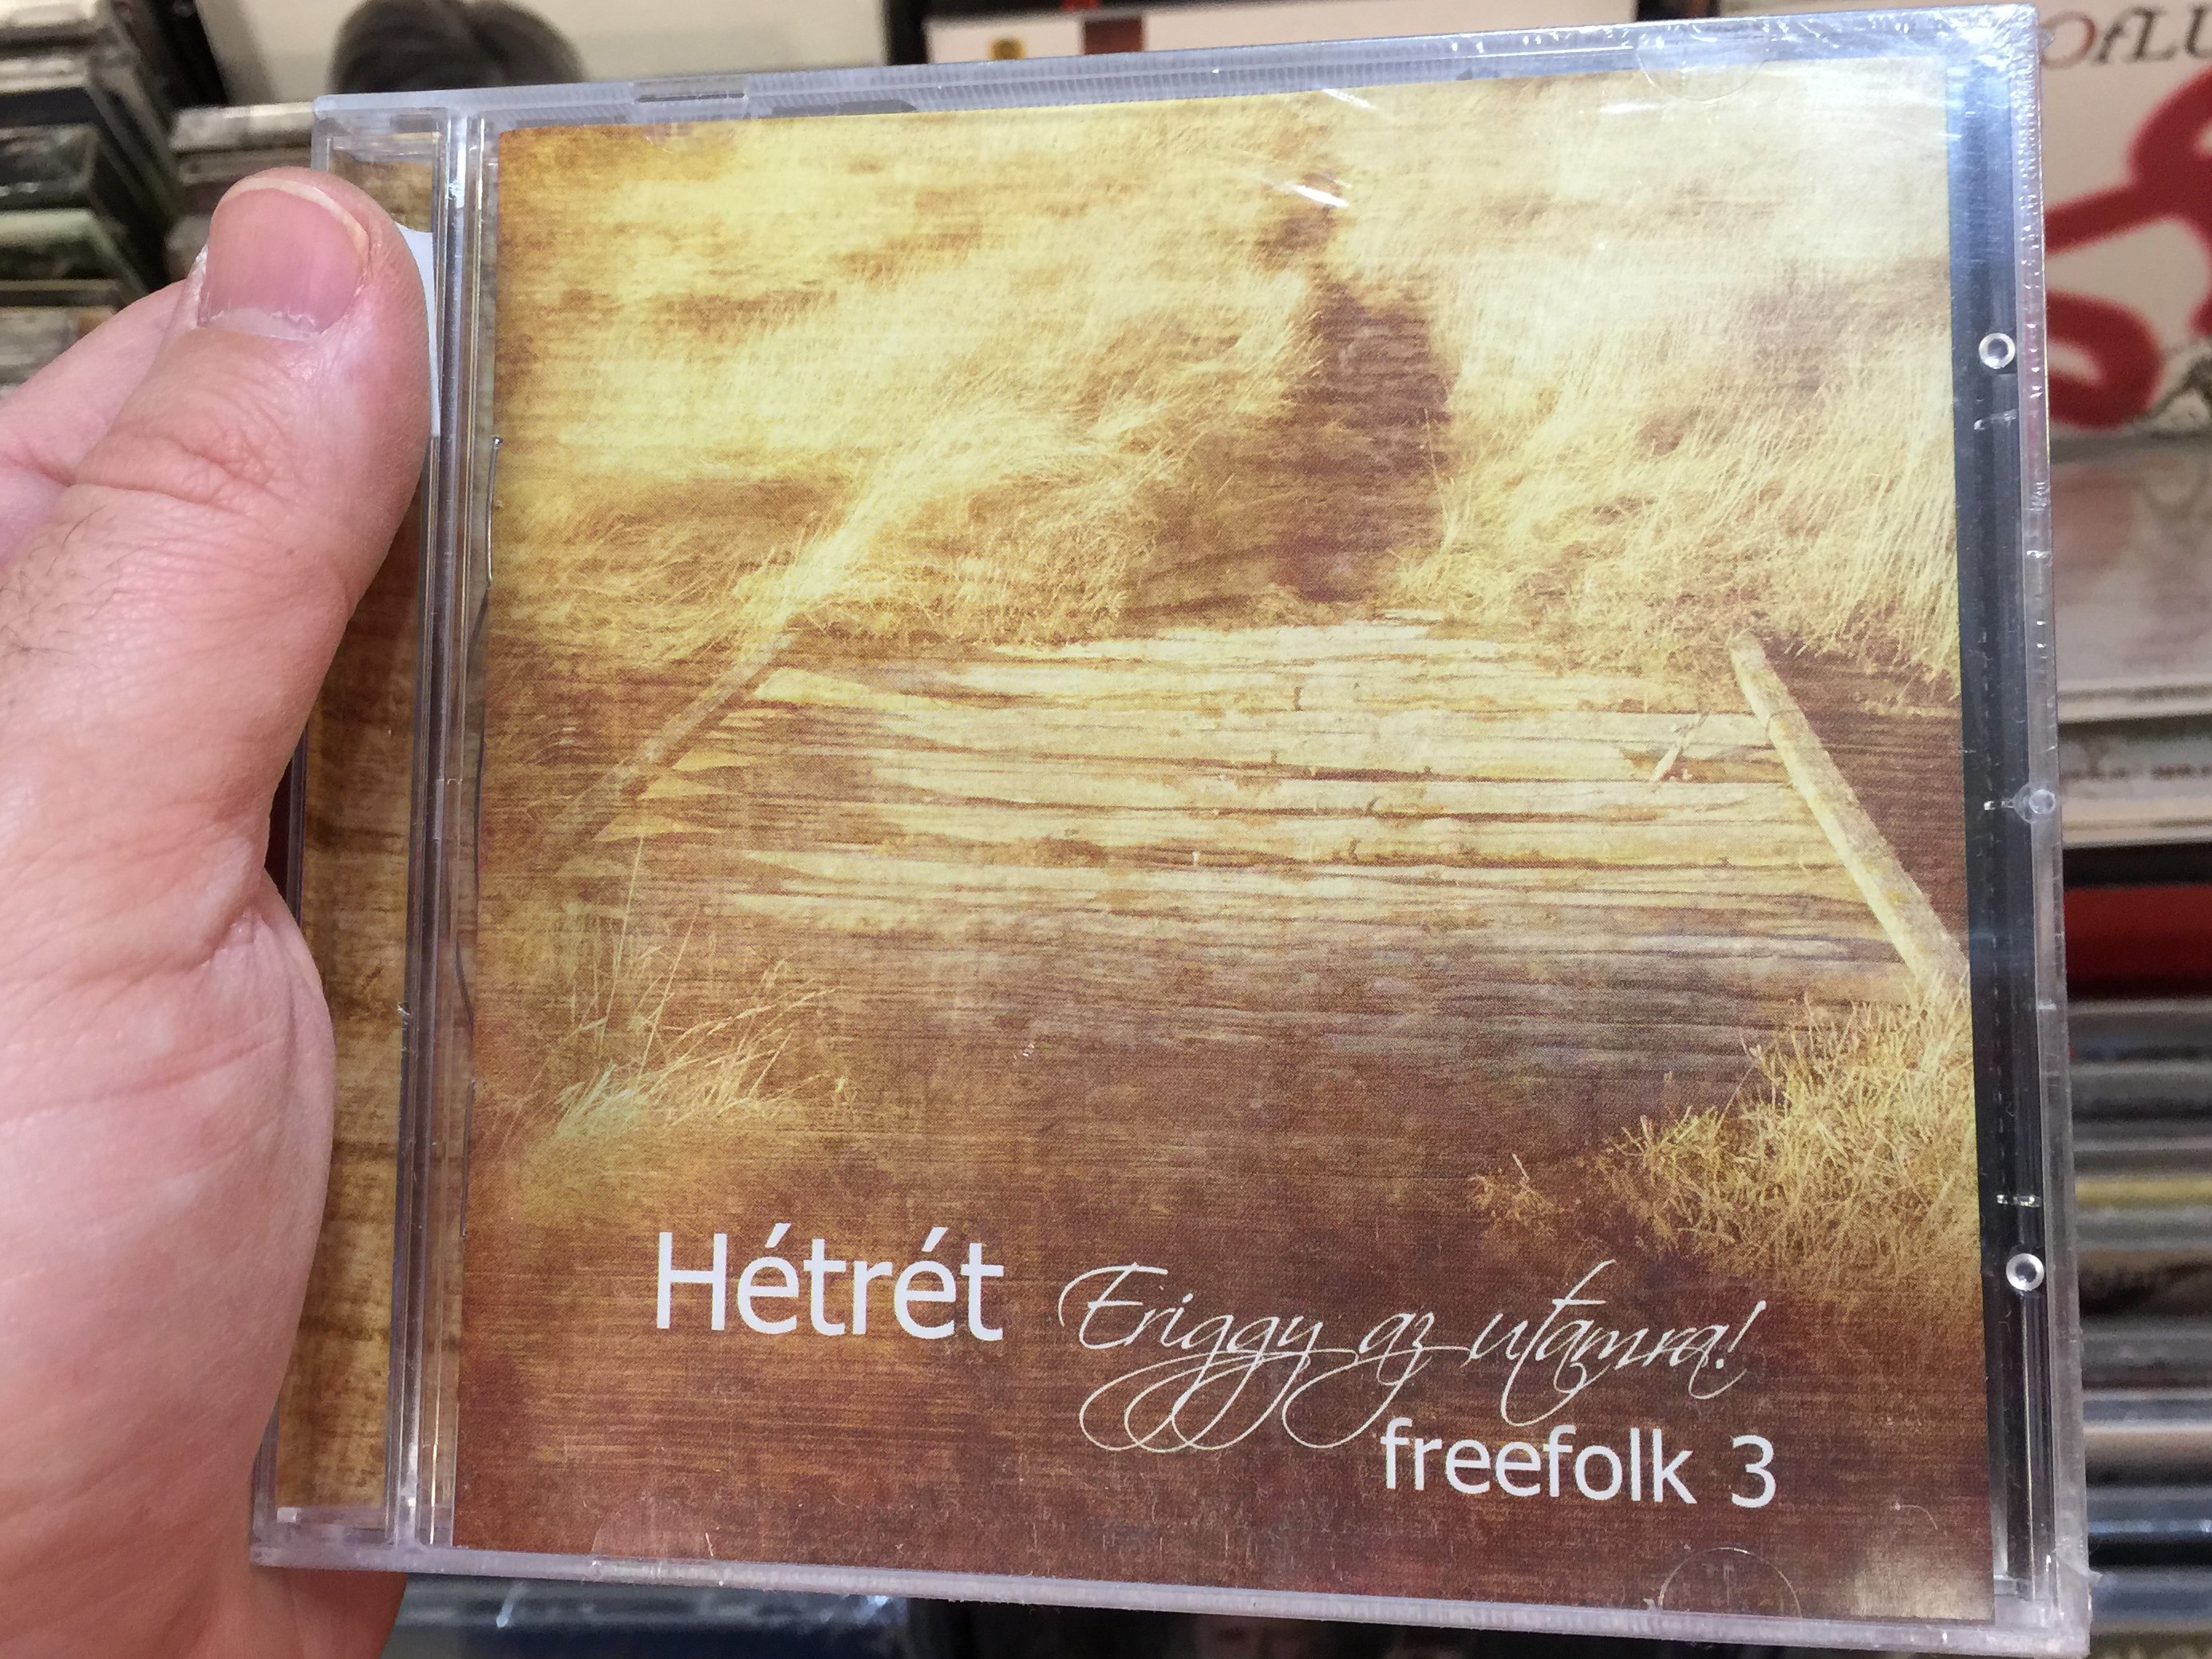 h-tr-t-eriggy-az-utamra-freefolk-3-audio-cd-2008-1-.jpg